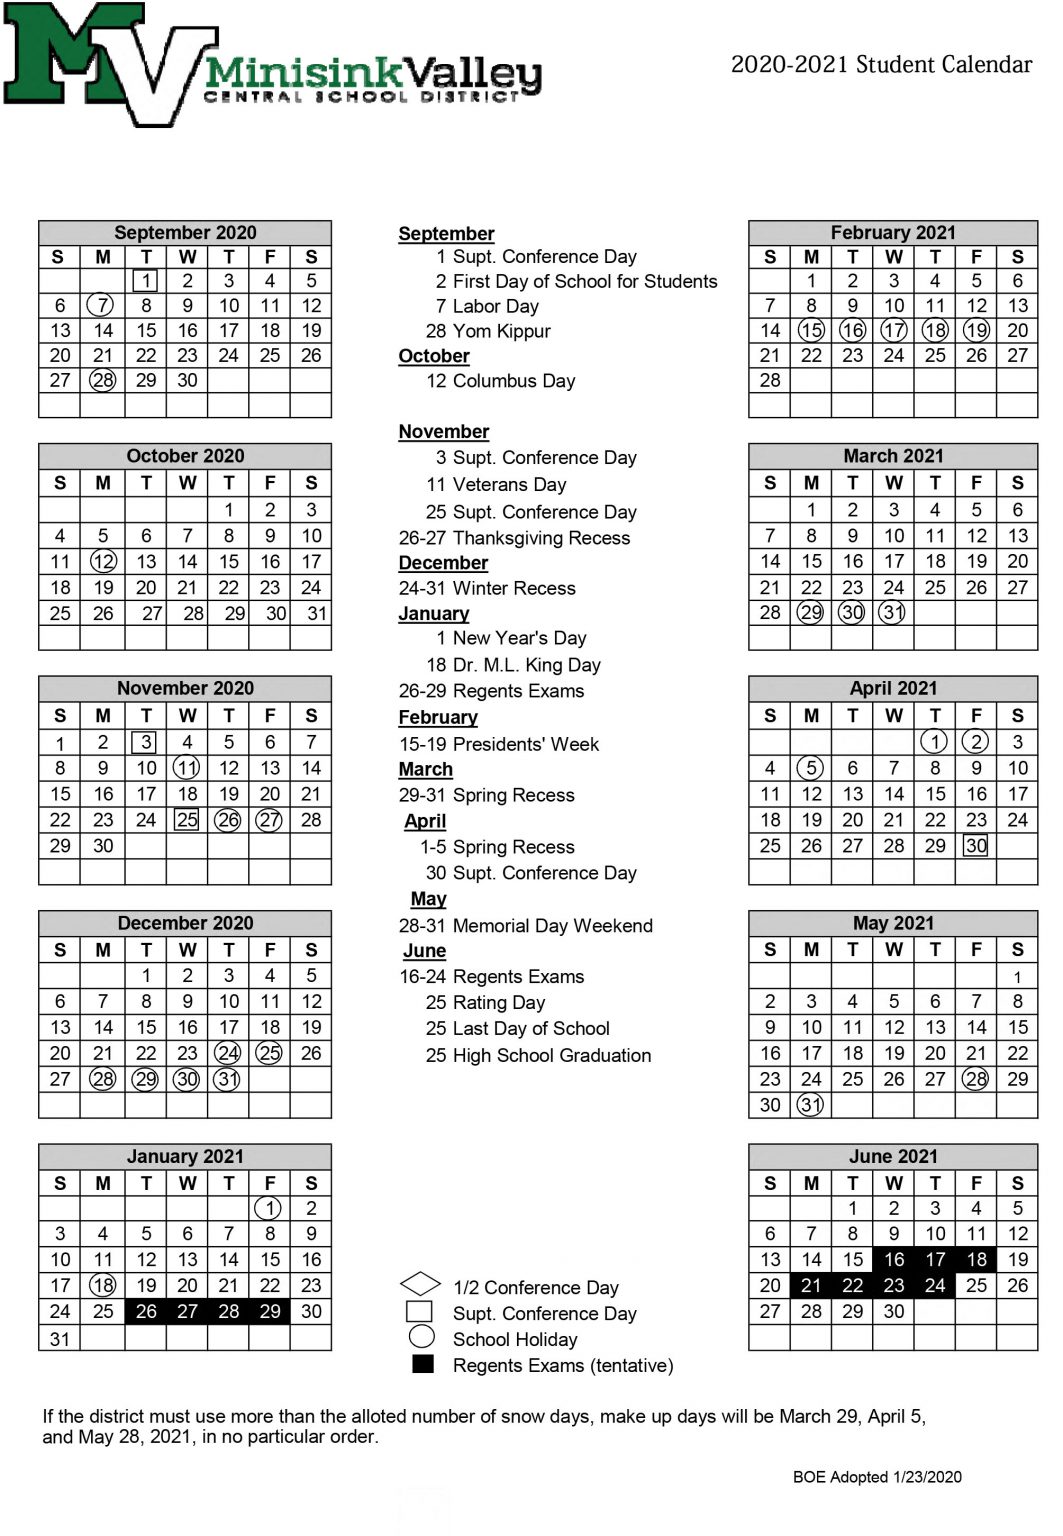 board-of-education-adopts-2020-21-school-district-calendar-minisink